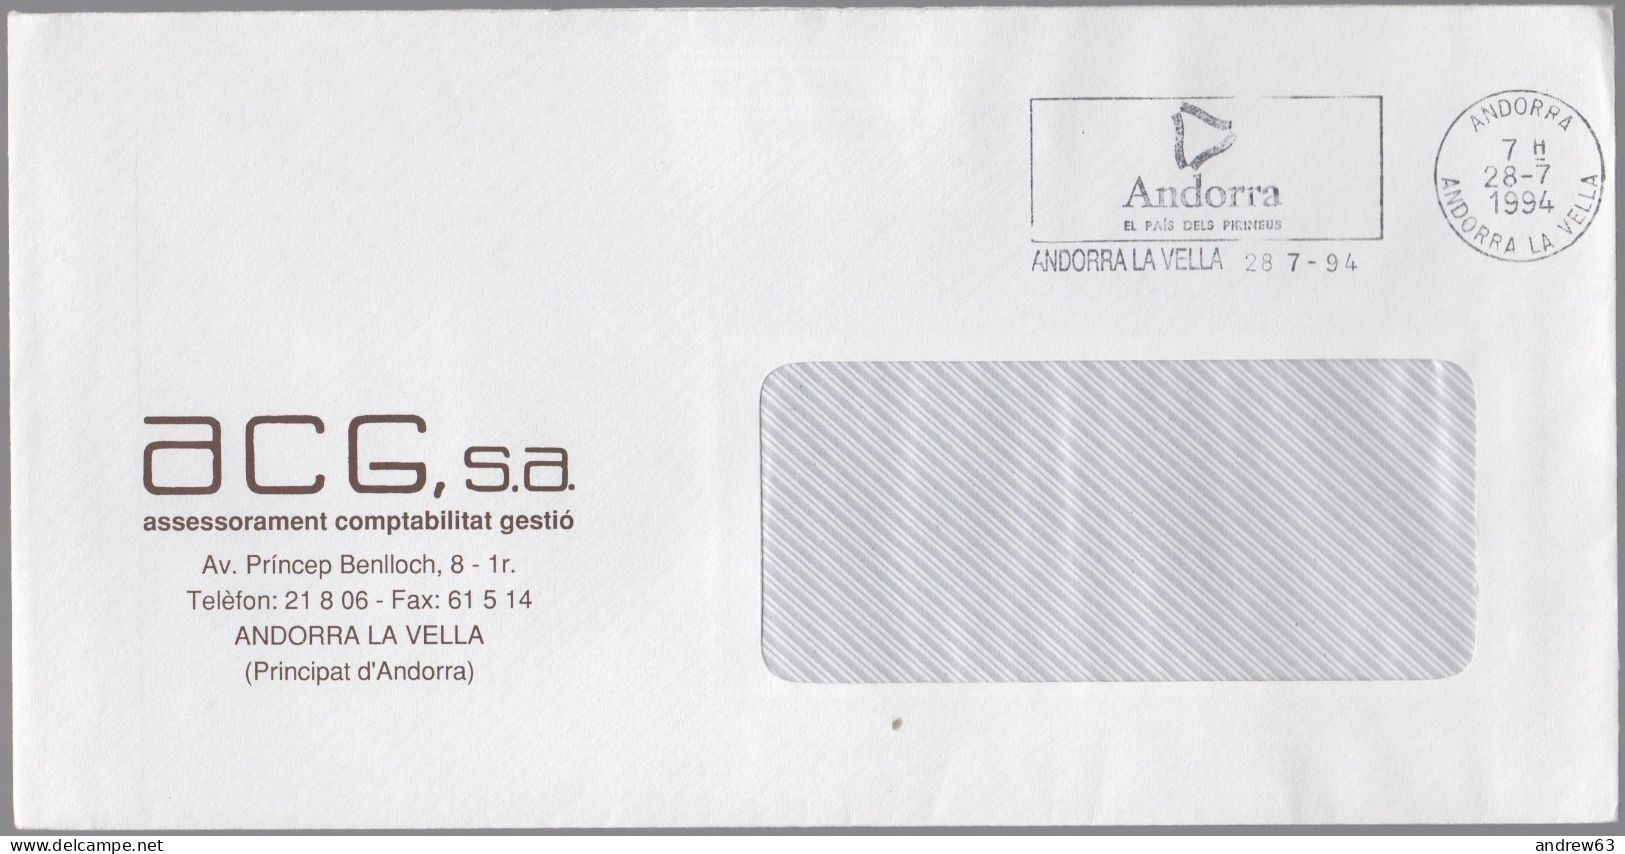 ANDORRA - ANDORRE - 1994 - Lettre En Franchise + Flamme - ACG, S.a. - Viaggiata Da Andorra La Vella - Covers & Documents